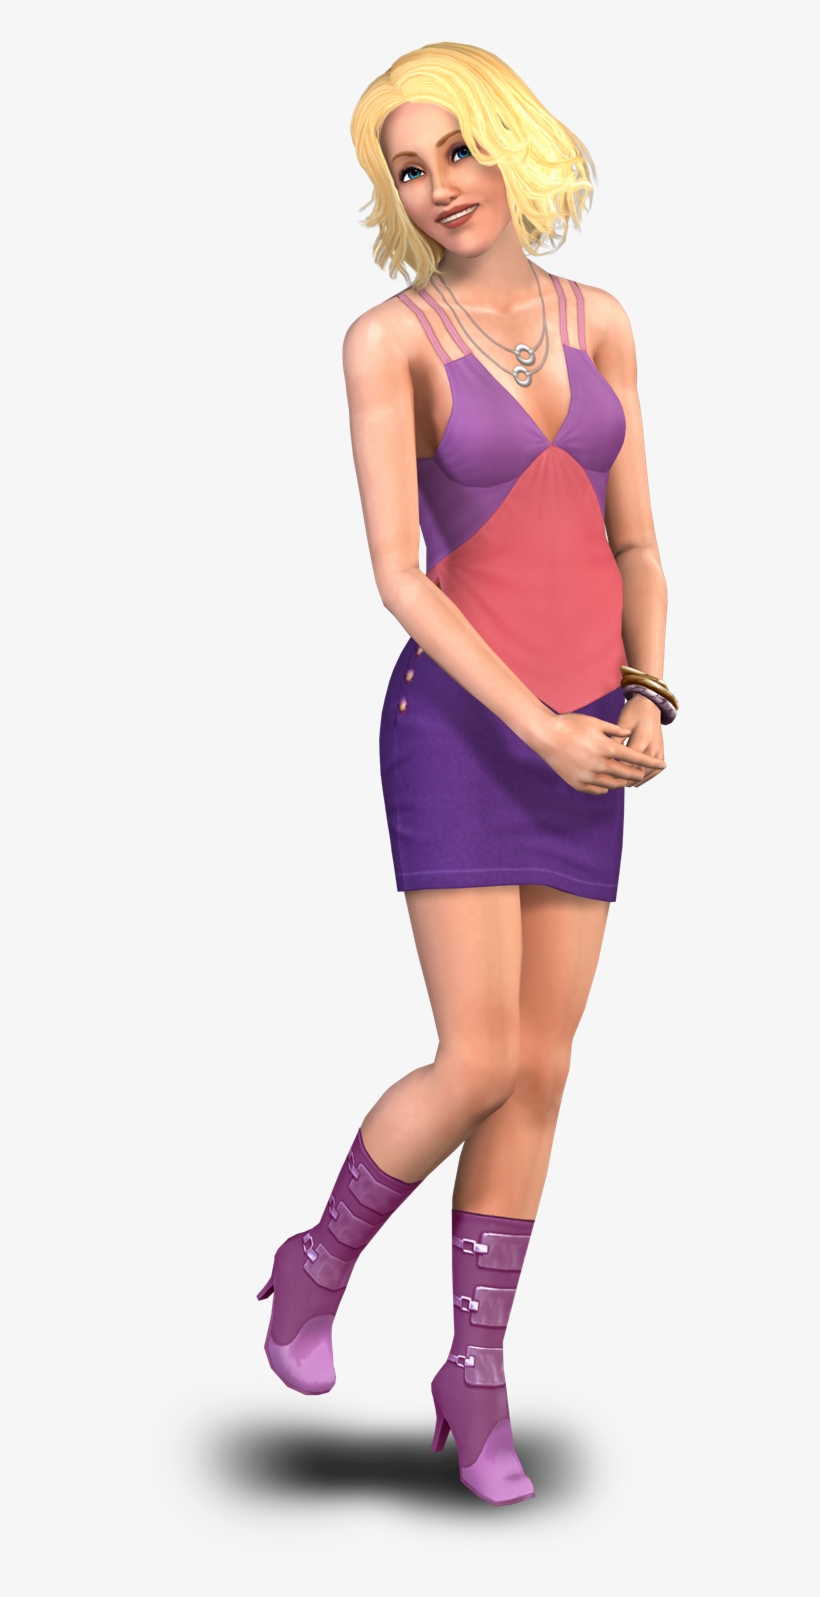 Sims 3 sims wiki